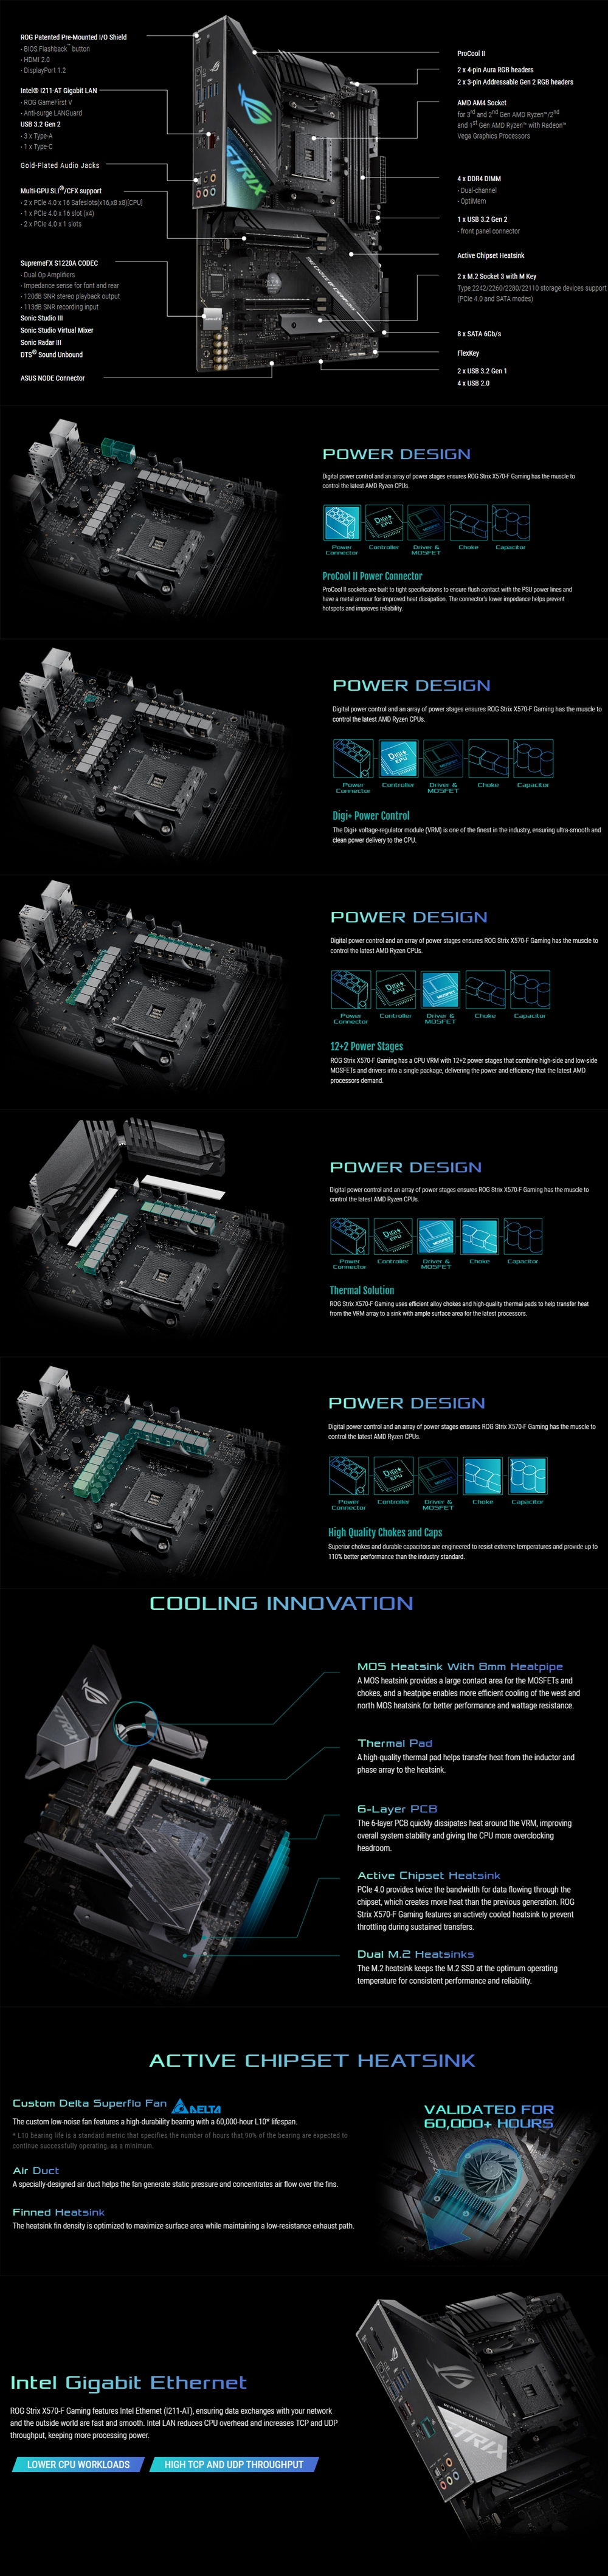 Asus Rog Strix X570 F Gaming Motherboard Amd X570 Chip Atx Motherboard Dual M 2 With Heatsinks Intel Gigabit Ethernet Alexnld Com